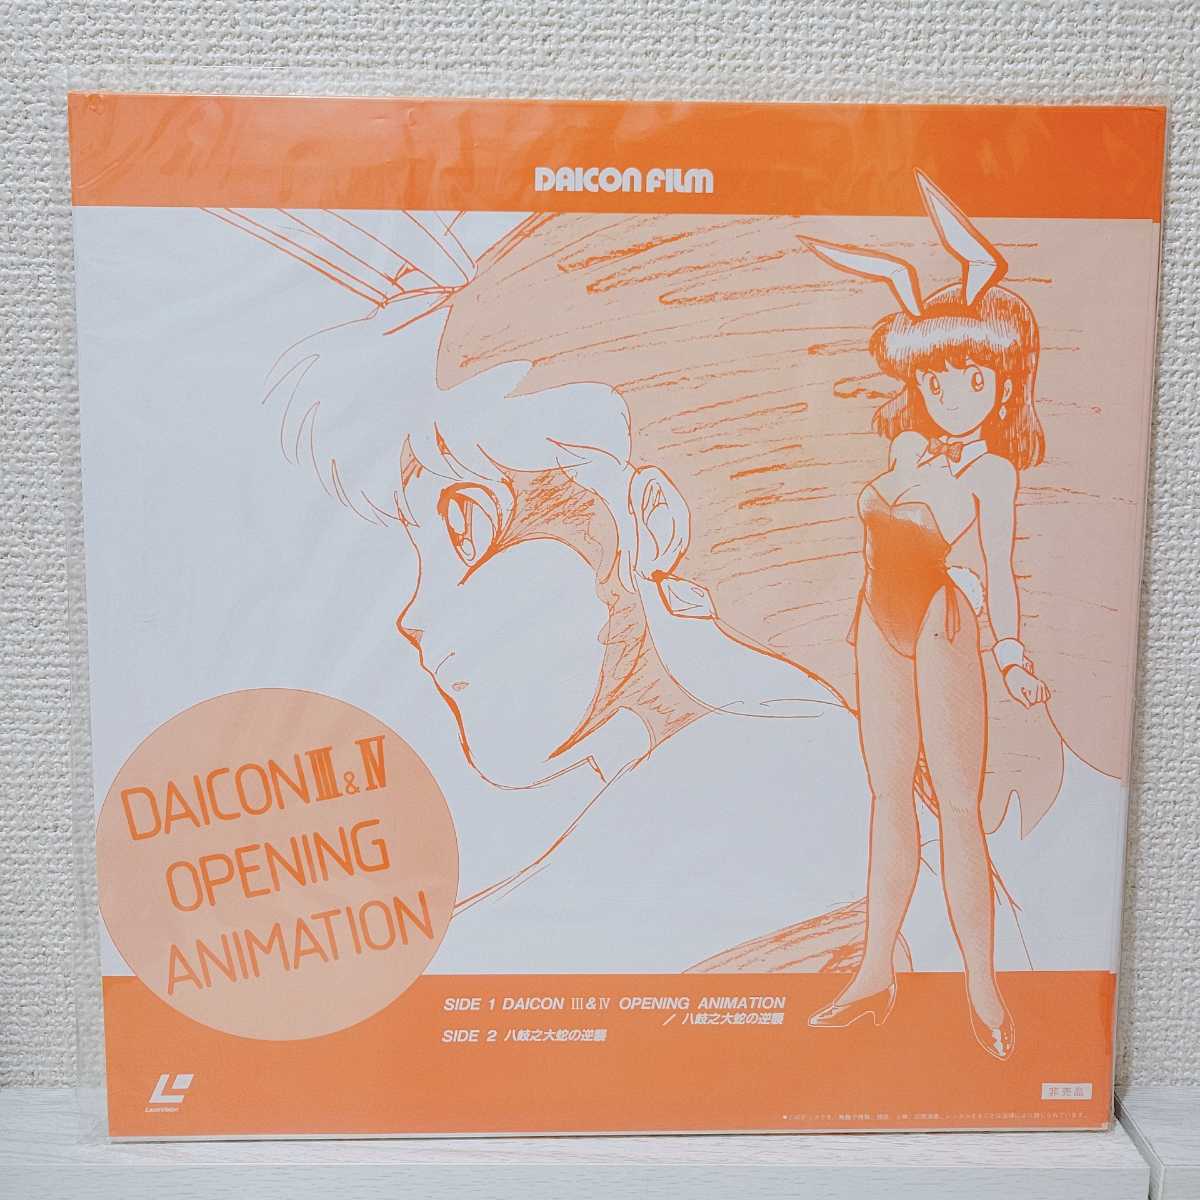  re-exhibition none ultimate beautiful goods LD daikon film opening animation Daicon III&IV film laser disk gainaks.. preeminence Akira anime 